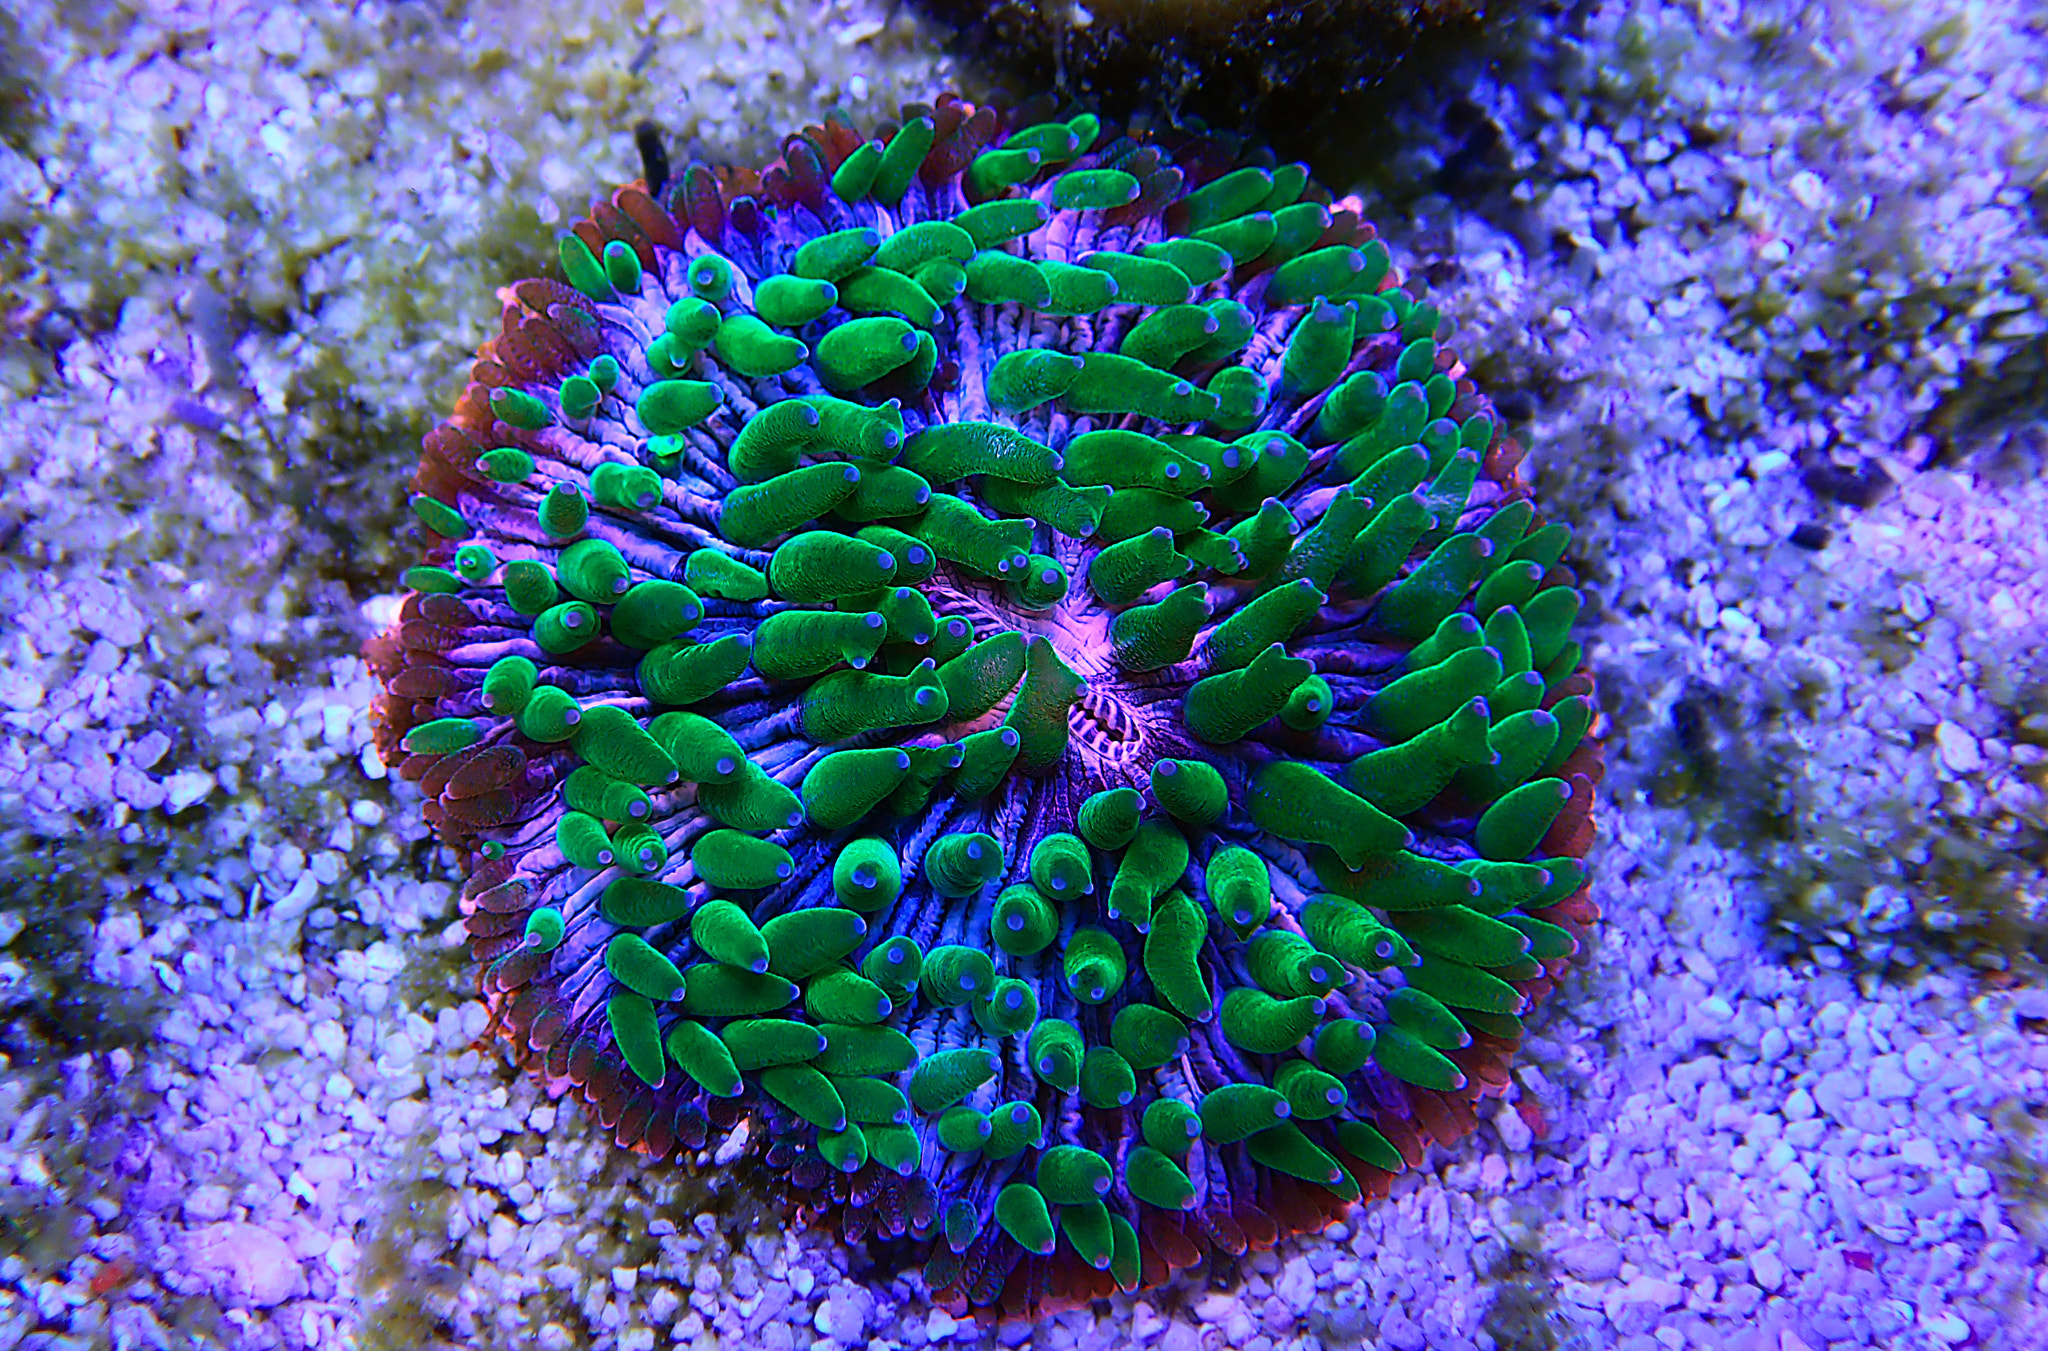 Fungia - Plate LPS coral macro photography in reef aquarium tank